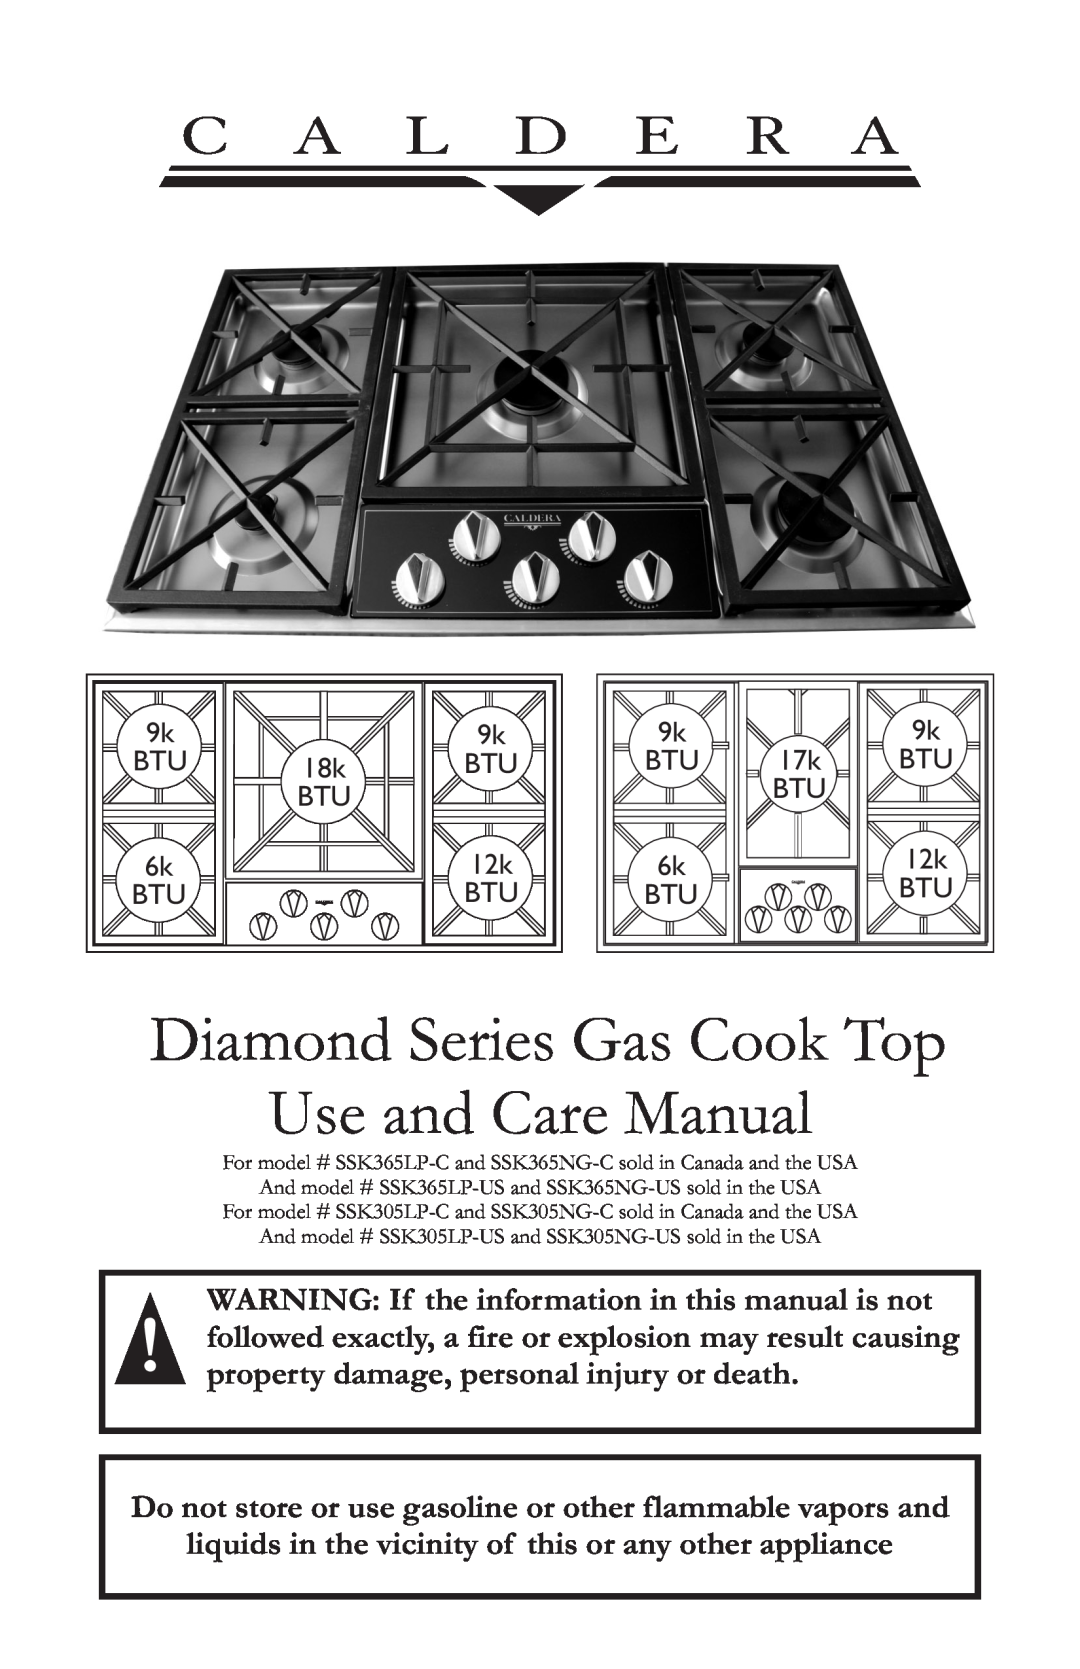 Caldera SSK365LP-C, SSK365NG-C, SSK365LP-US manual Diamond Series Gas Cook Top Use and Care Manual, C A L D E R A 